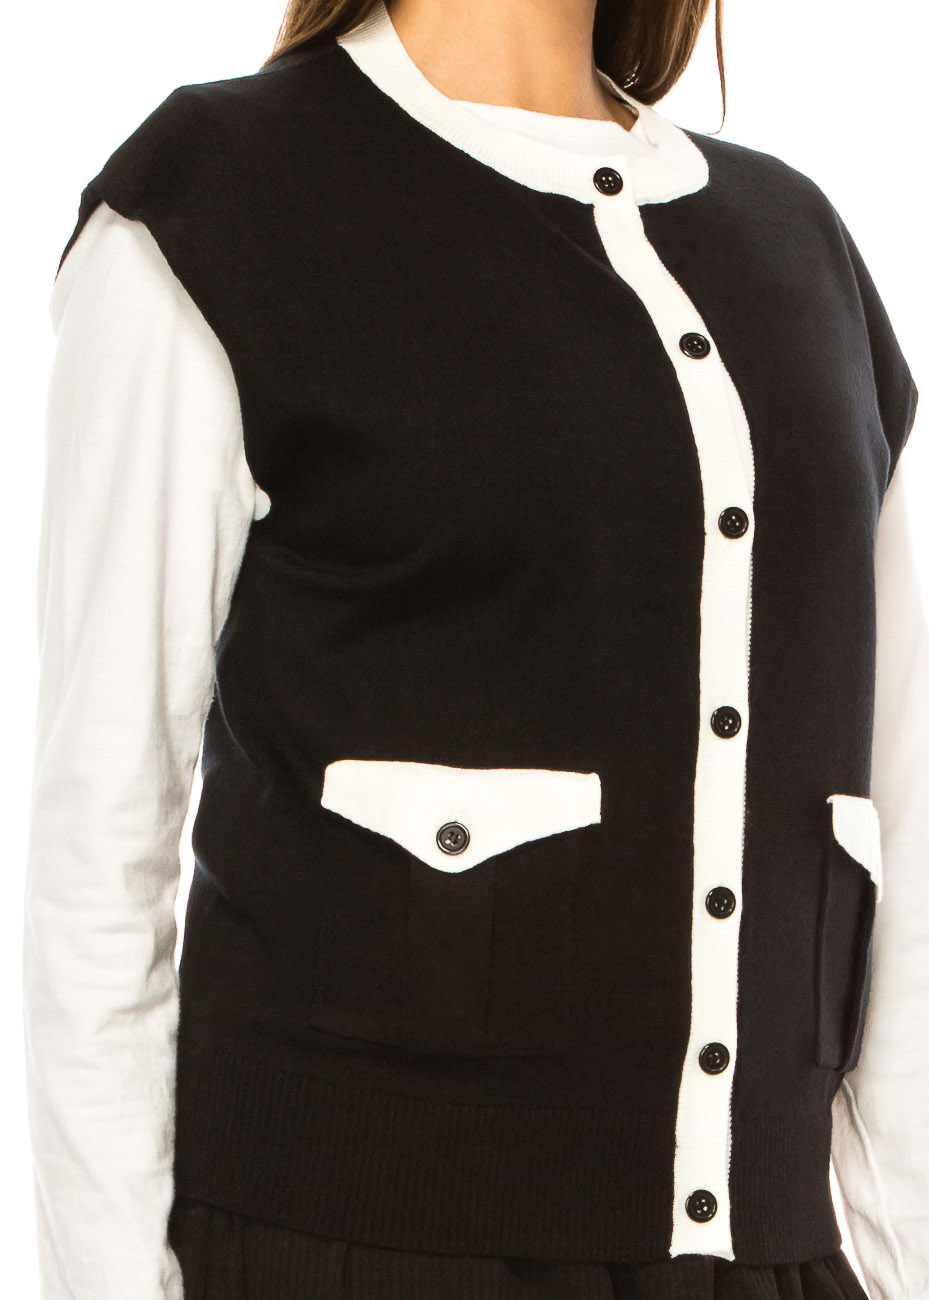 Black & White Trim Knit Vest